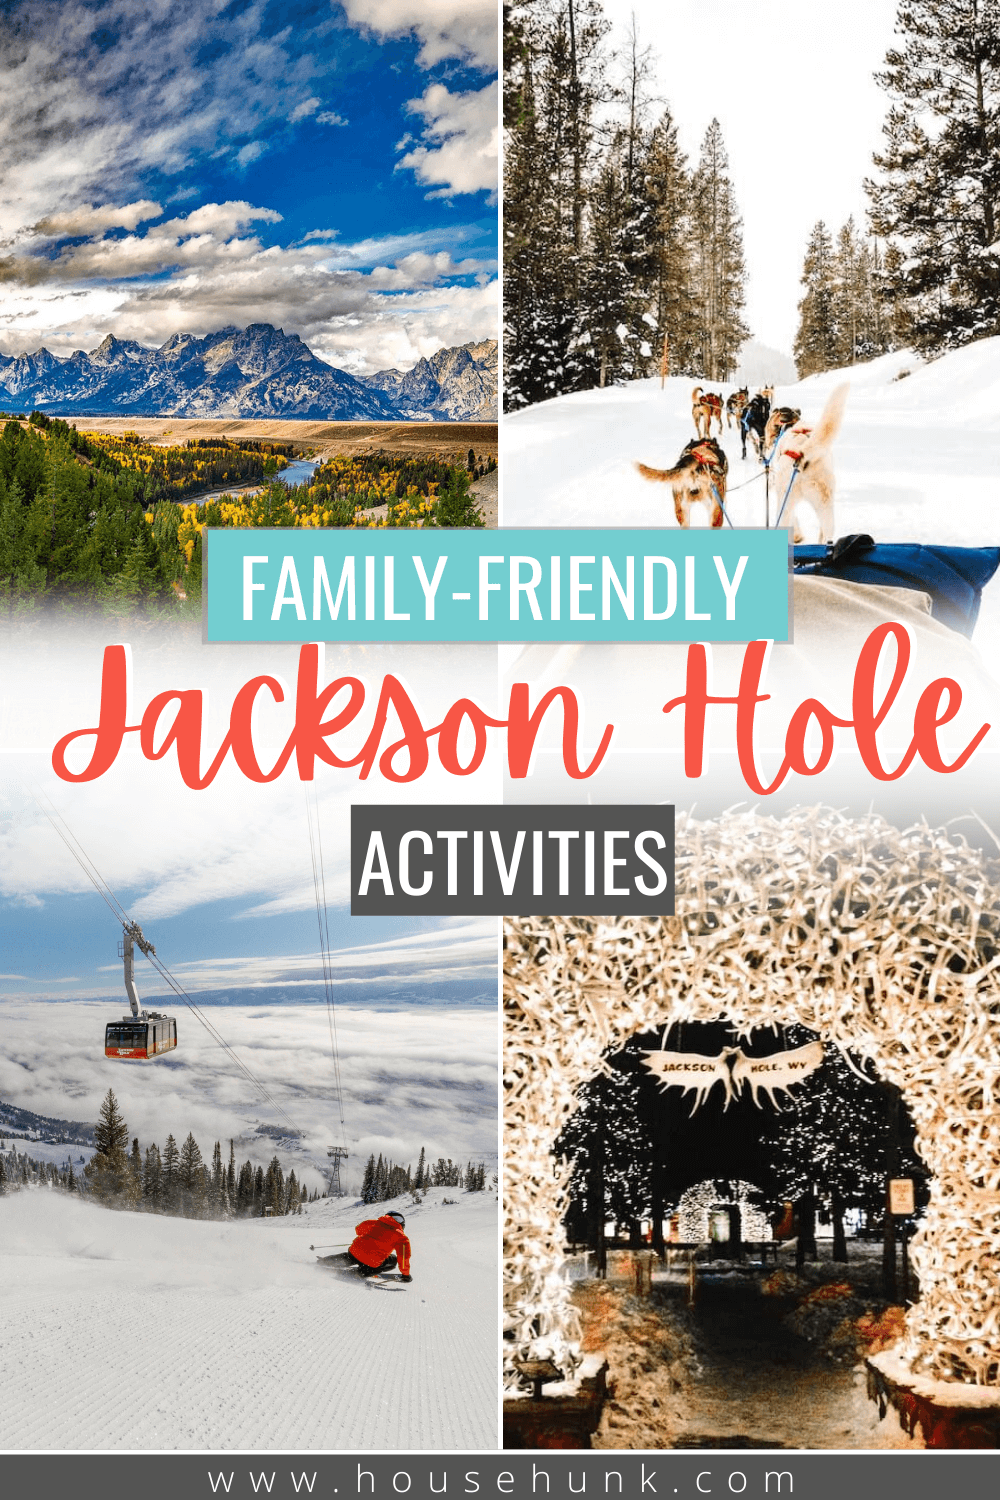 Jackson Hole Family Activities